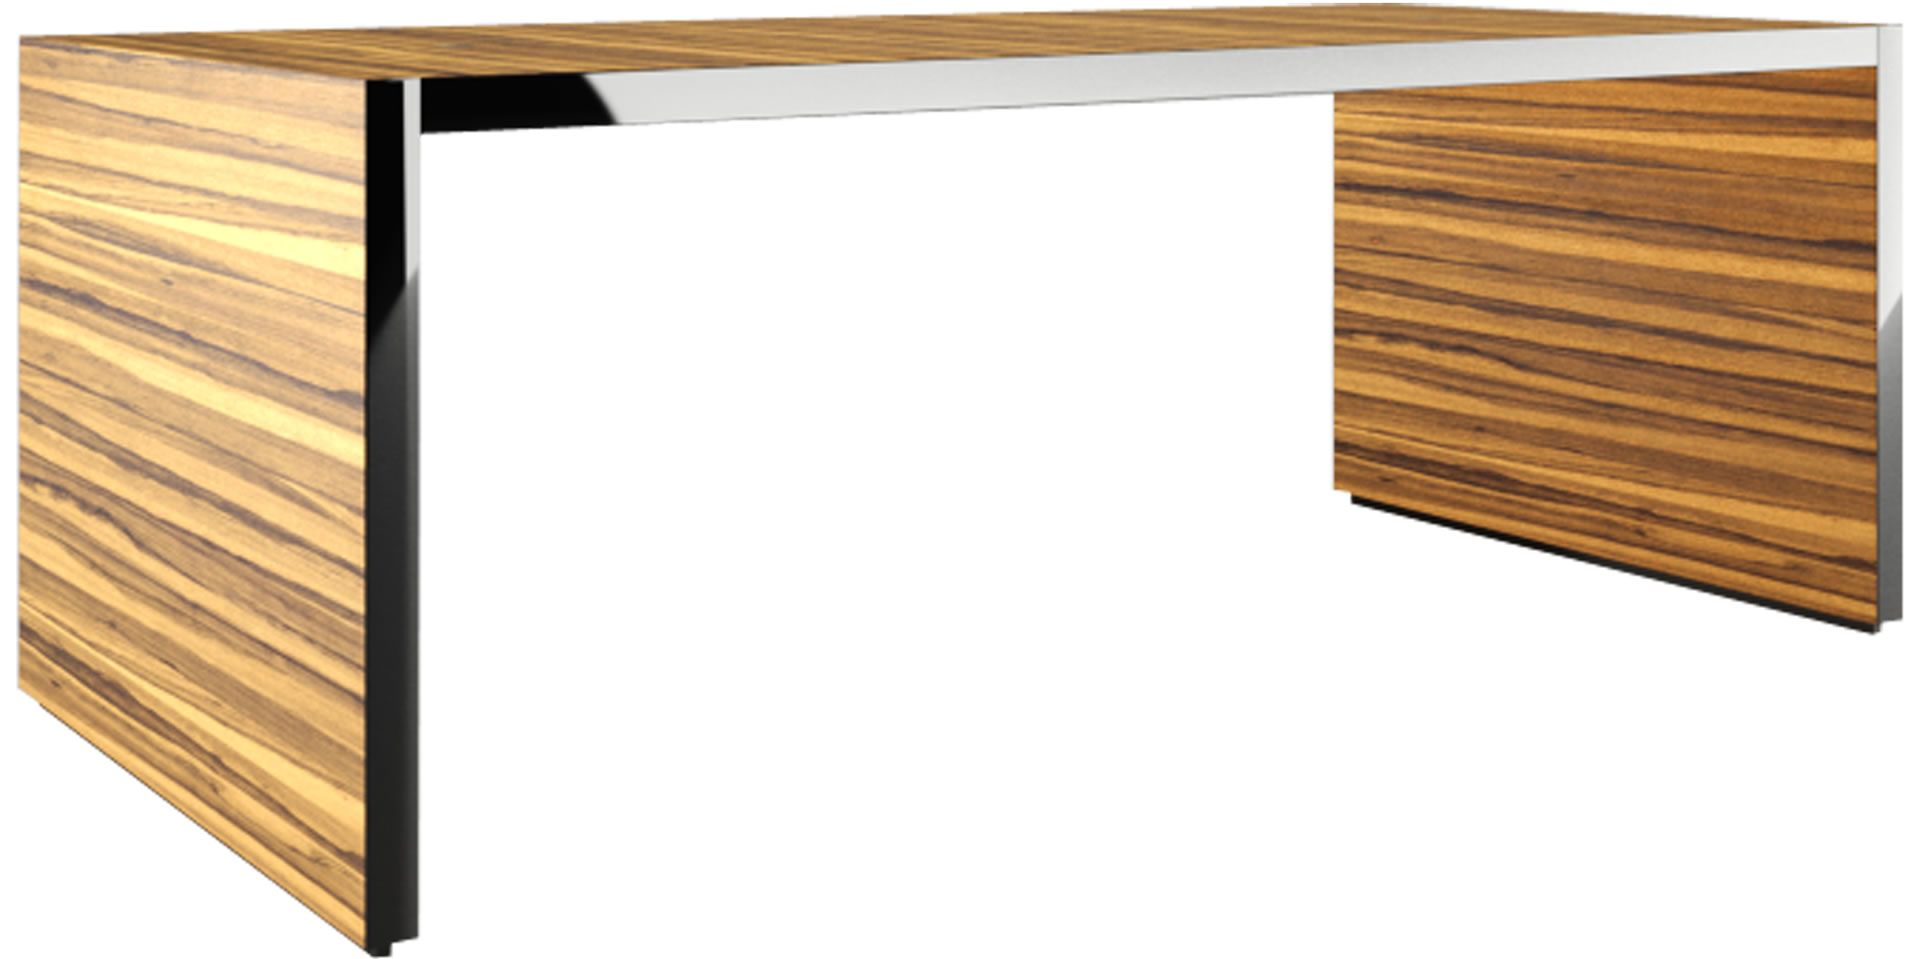 Tisch wangen-tisch helles Zebrano-Holz modern edel